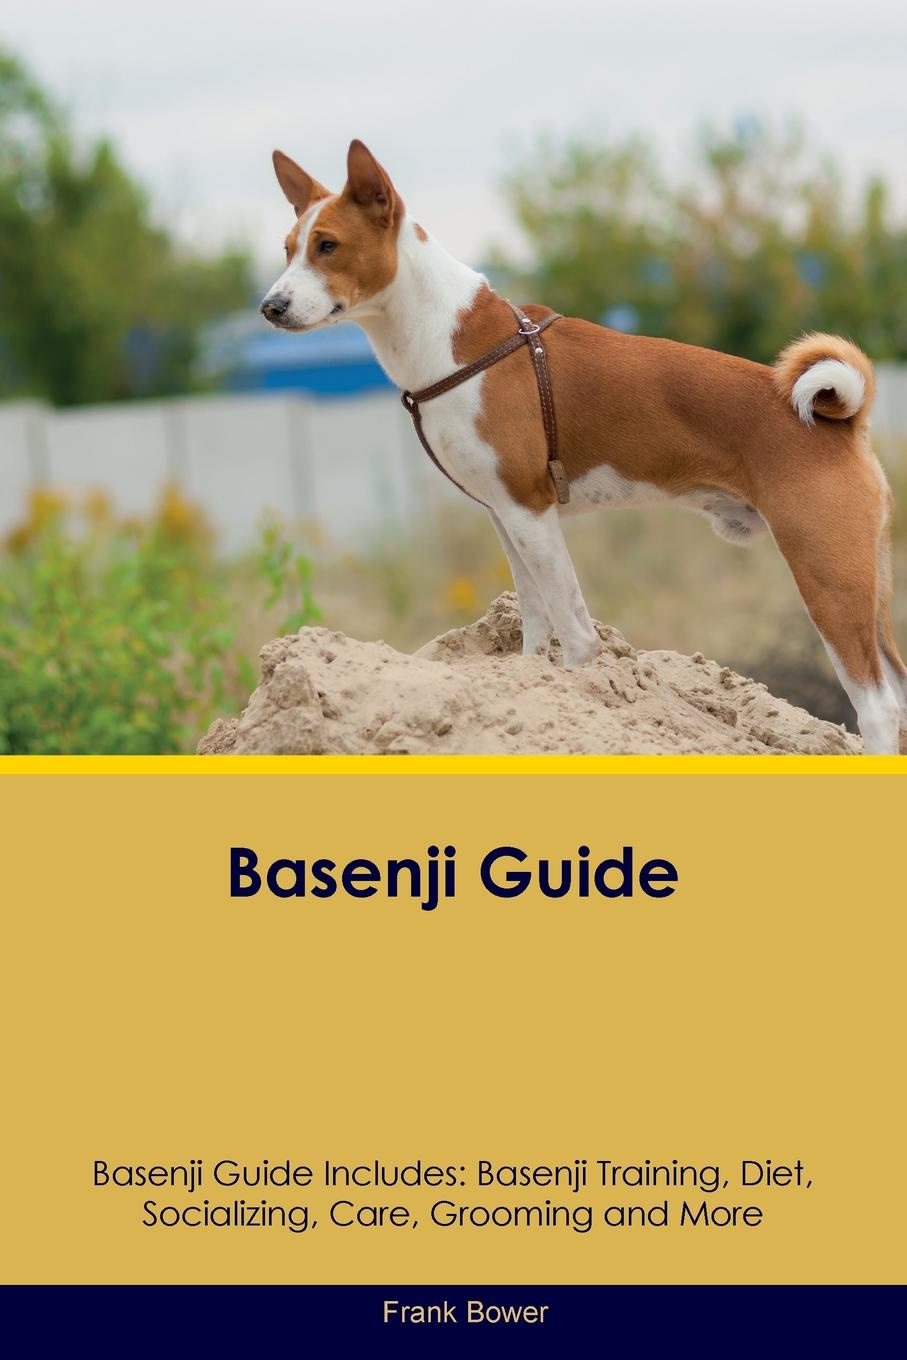 Basenji Guide Basenji Guide Includes. Basenji Training, Diet, Socializing, Care, Grooming, Breeding and More